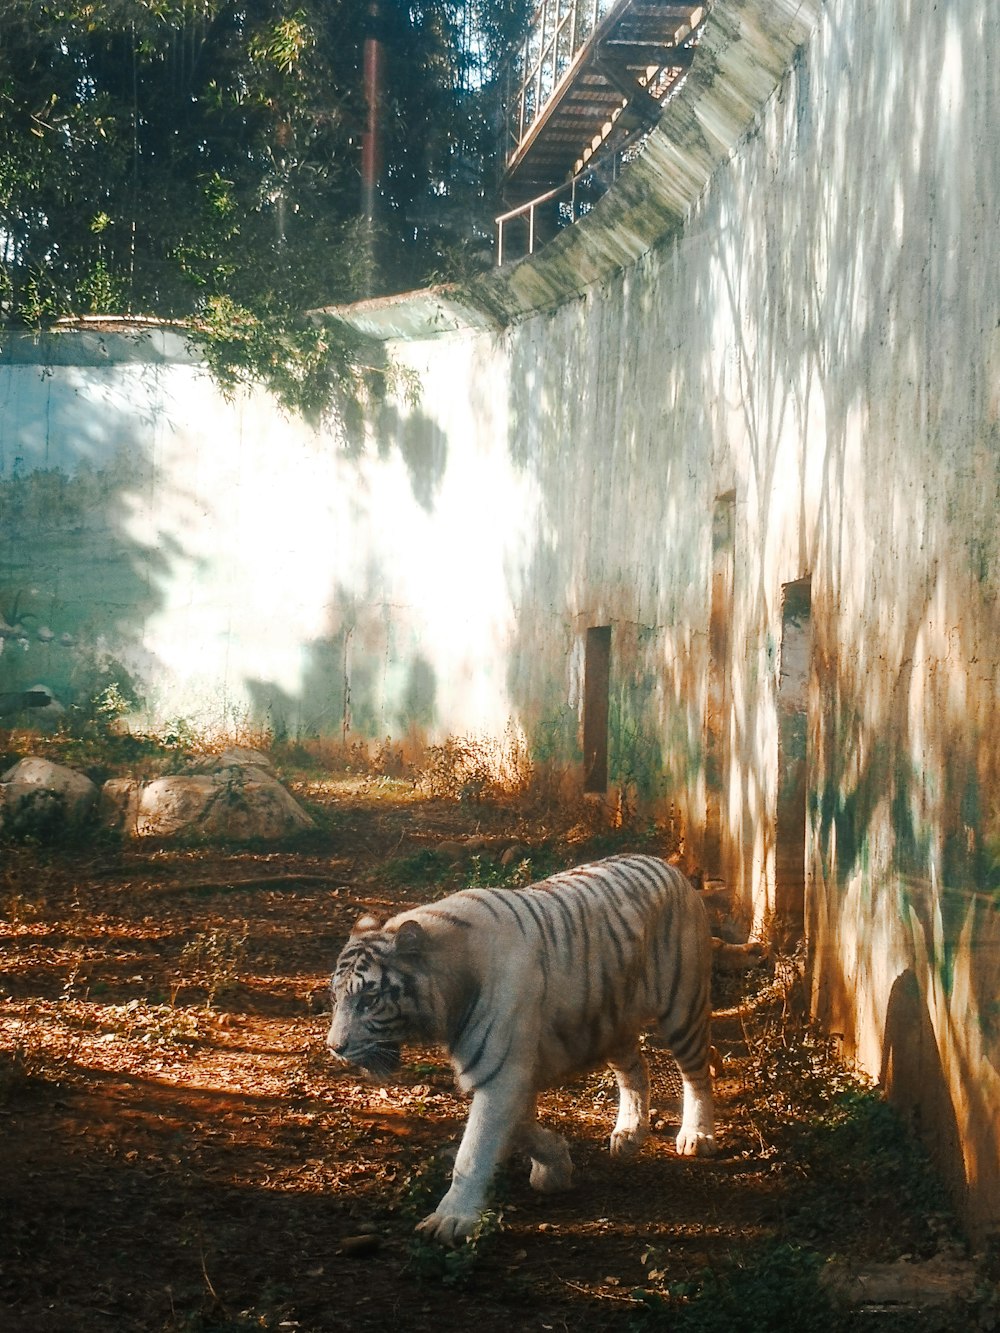 tigre andando na sujeira marrom